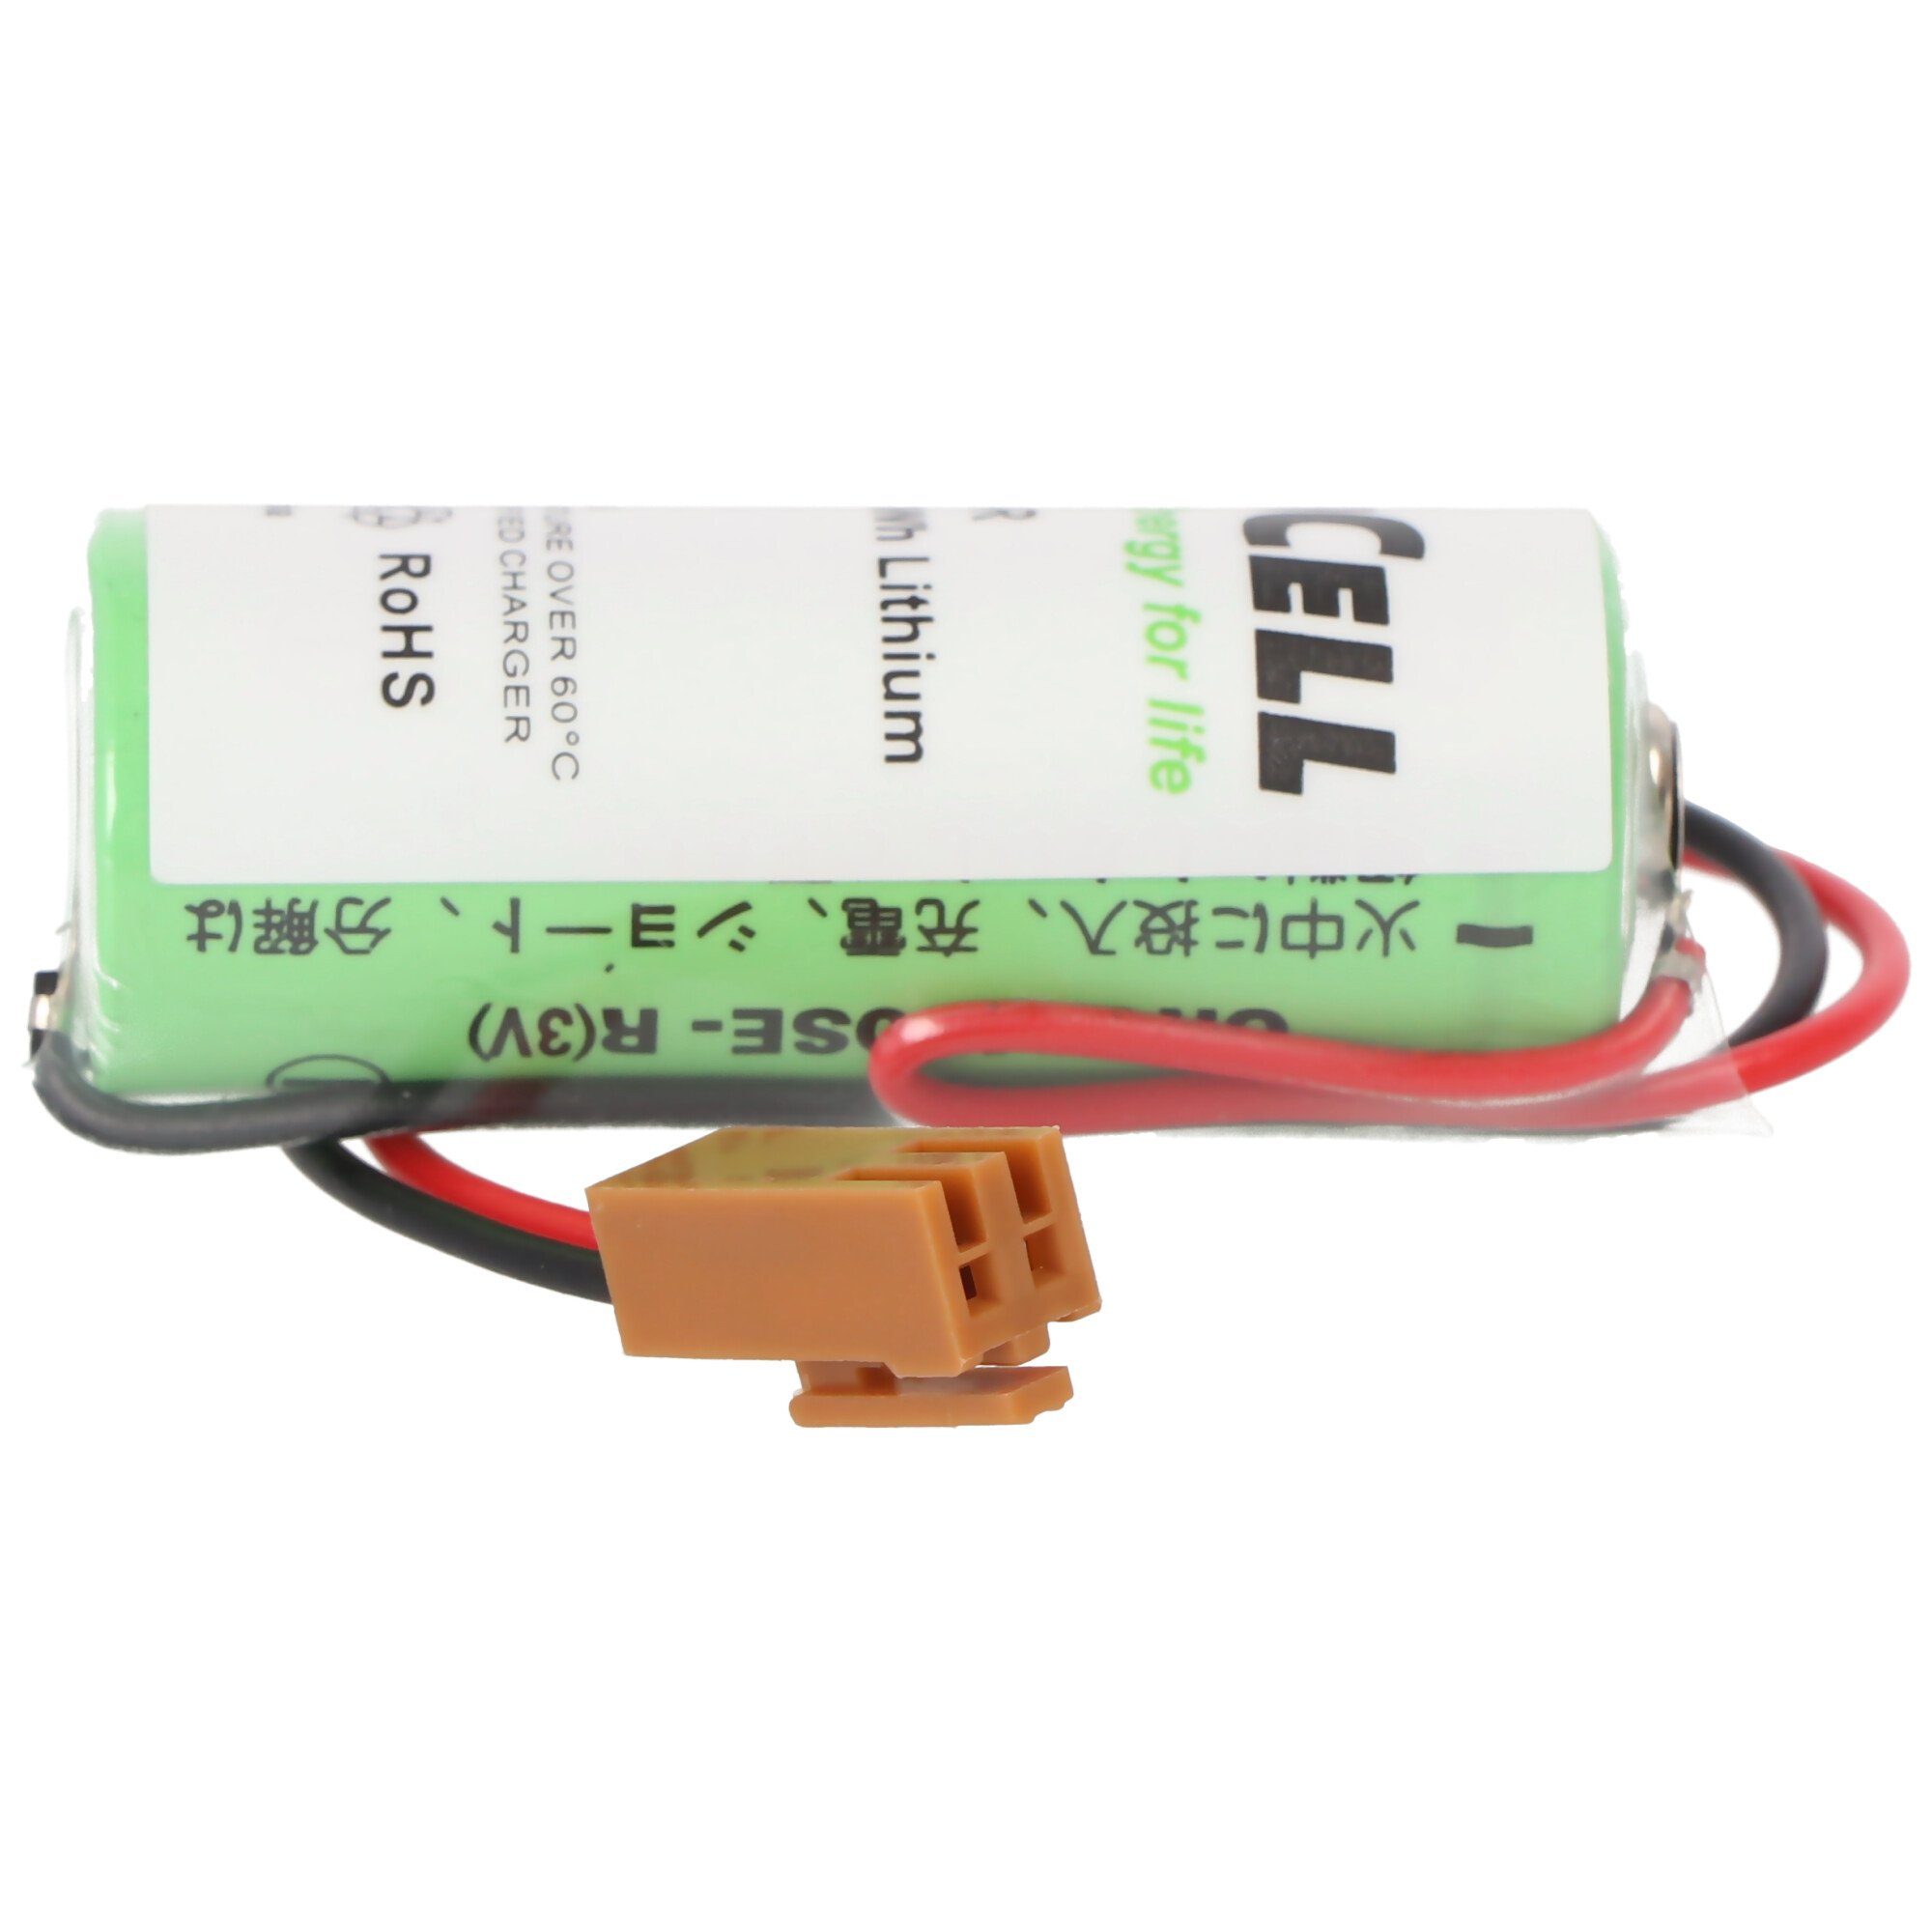 Sanyo Lithium Batterie CR17450E-R Size (3,0 LX98L-0031-0012, St A, mit und Kabel Batterie, V)